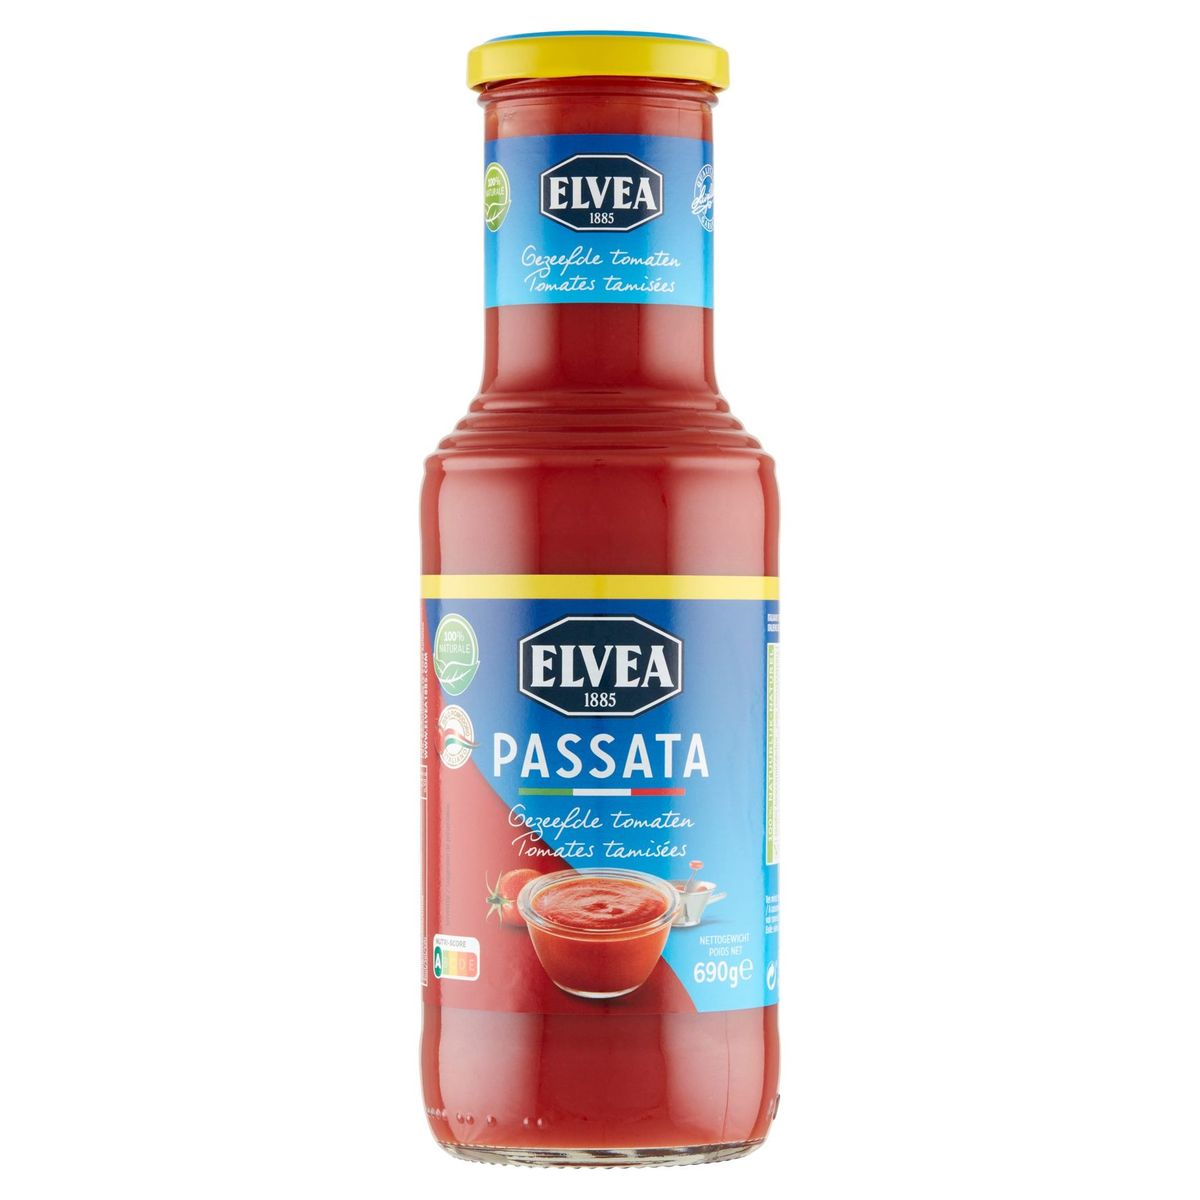 Elvea Passata Gezeefde Tomaten 690 g